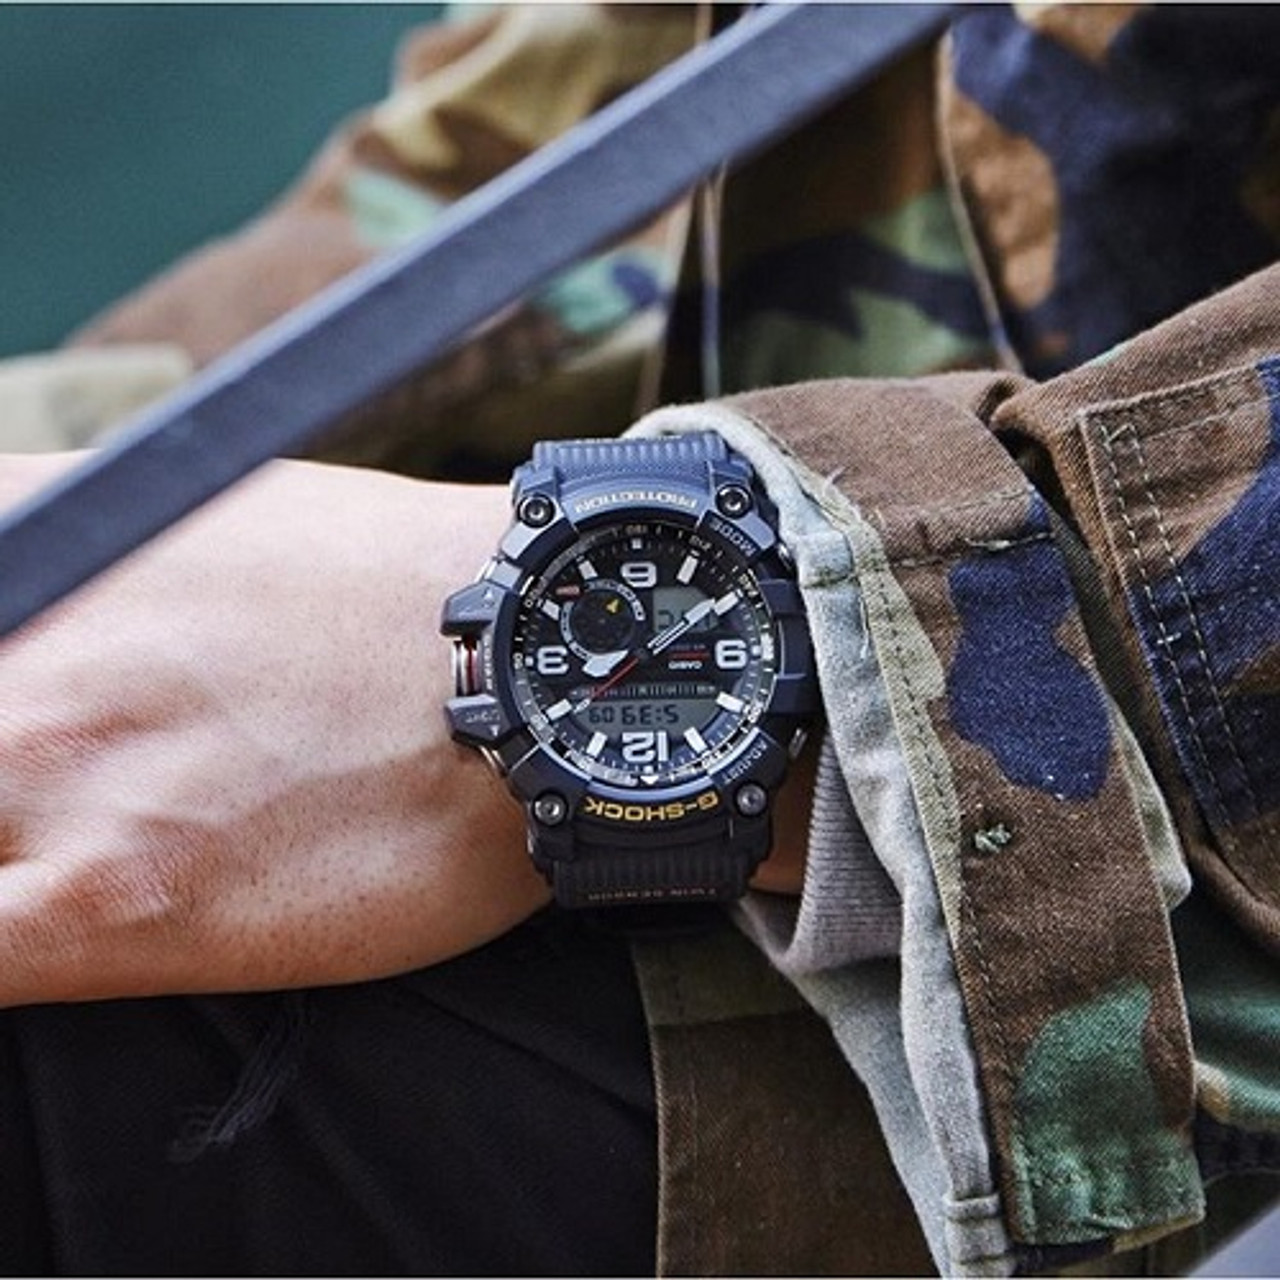 BUY Casio G-Shock Mudmaster Master of G Twin Sensor Sport Watch  GG-1000GB-1A, GG1000 - Buy Watches Online